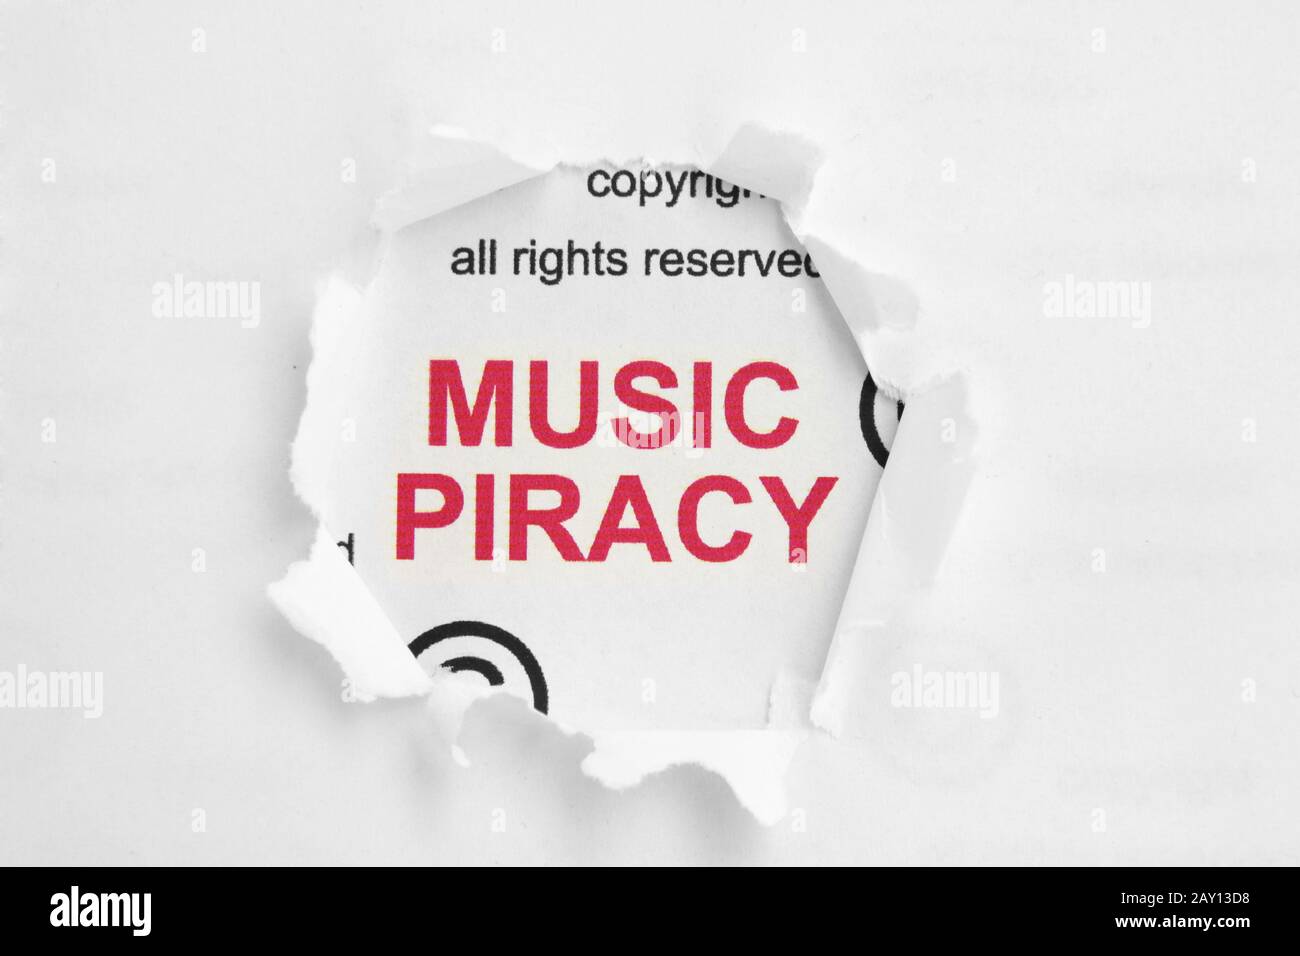 Music piracy Stock Photo